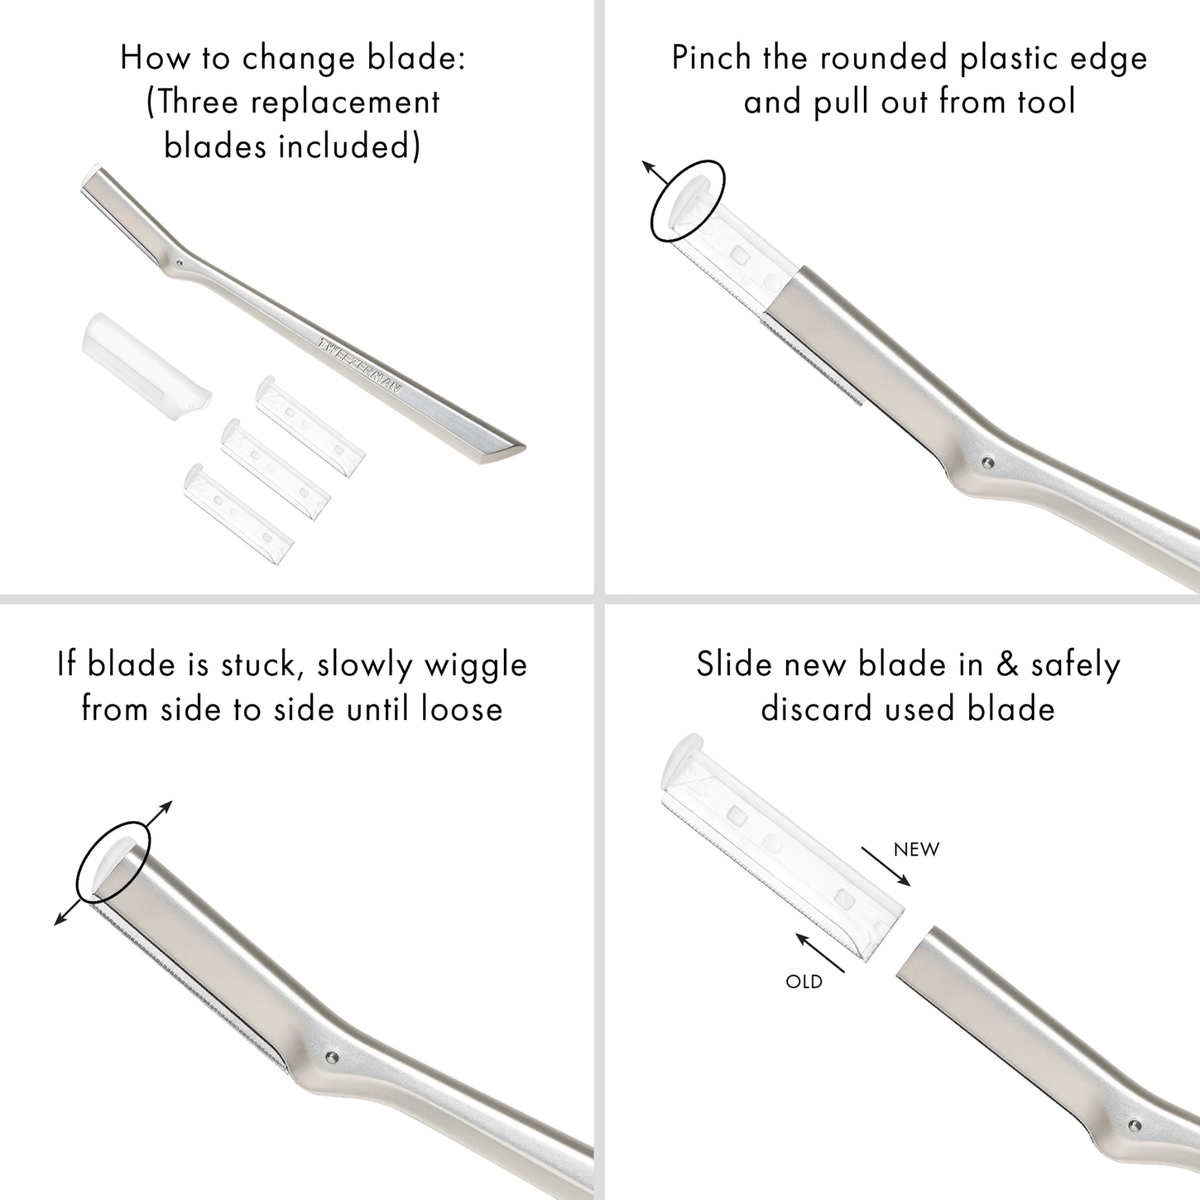 Alternate Image of Facial Razor Replacement Blades Blade Change